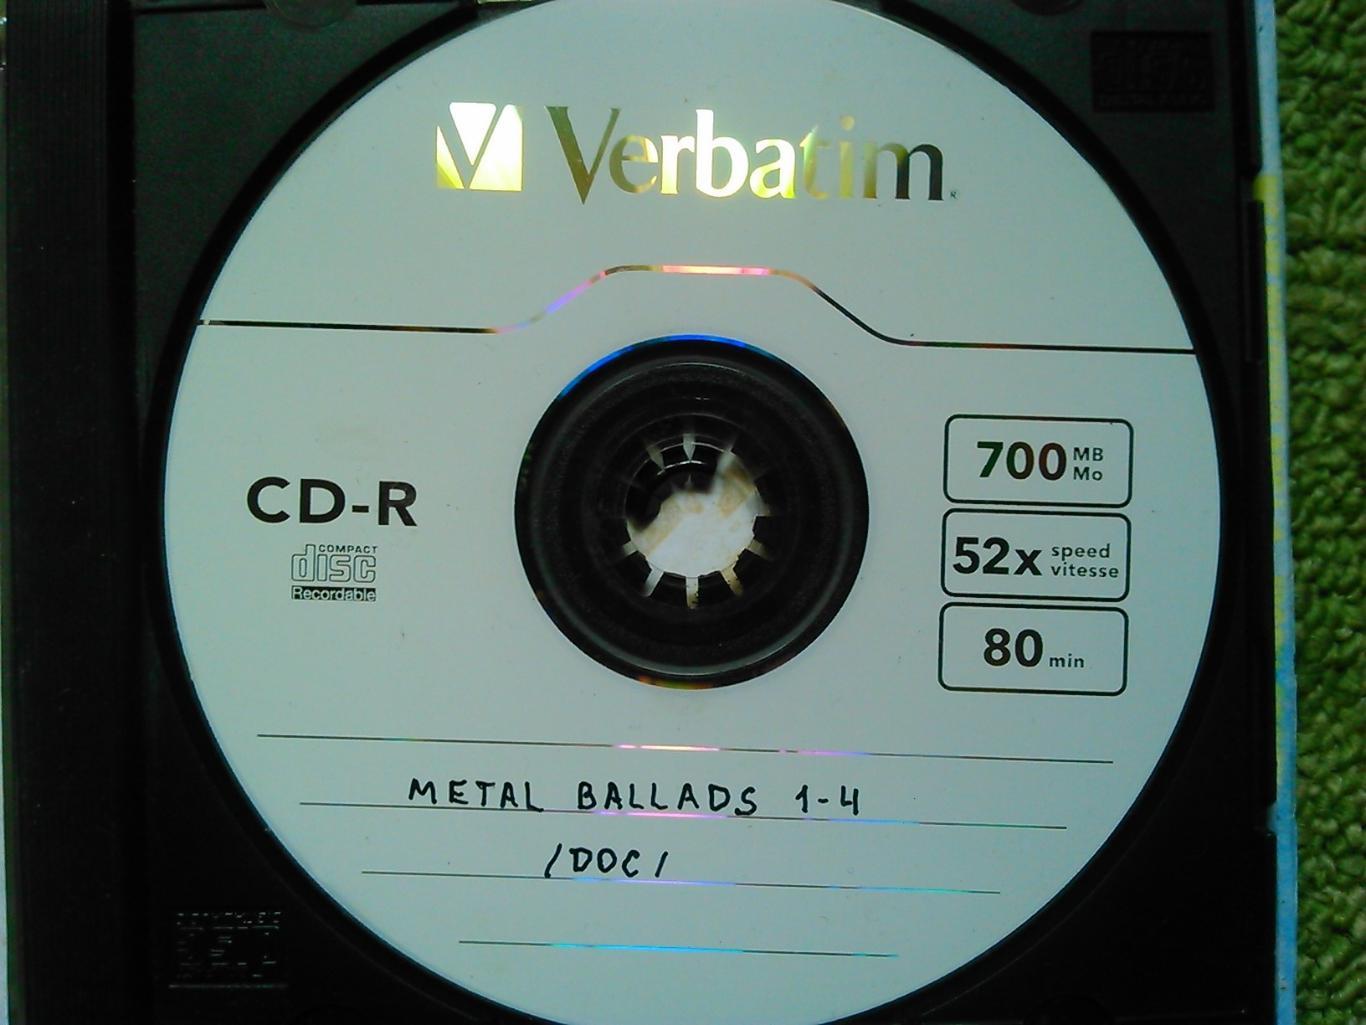 Аудио 2 CD METAL BALLADS vol 1-4 + Lee AARON. Оптом скидки до 46%! 1